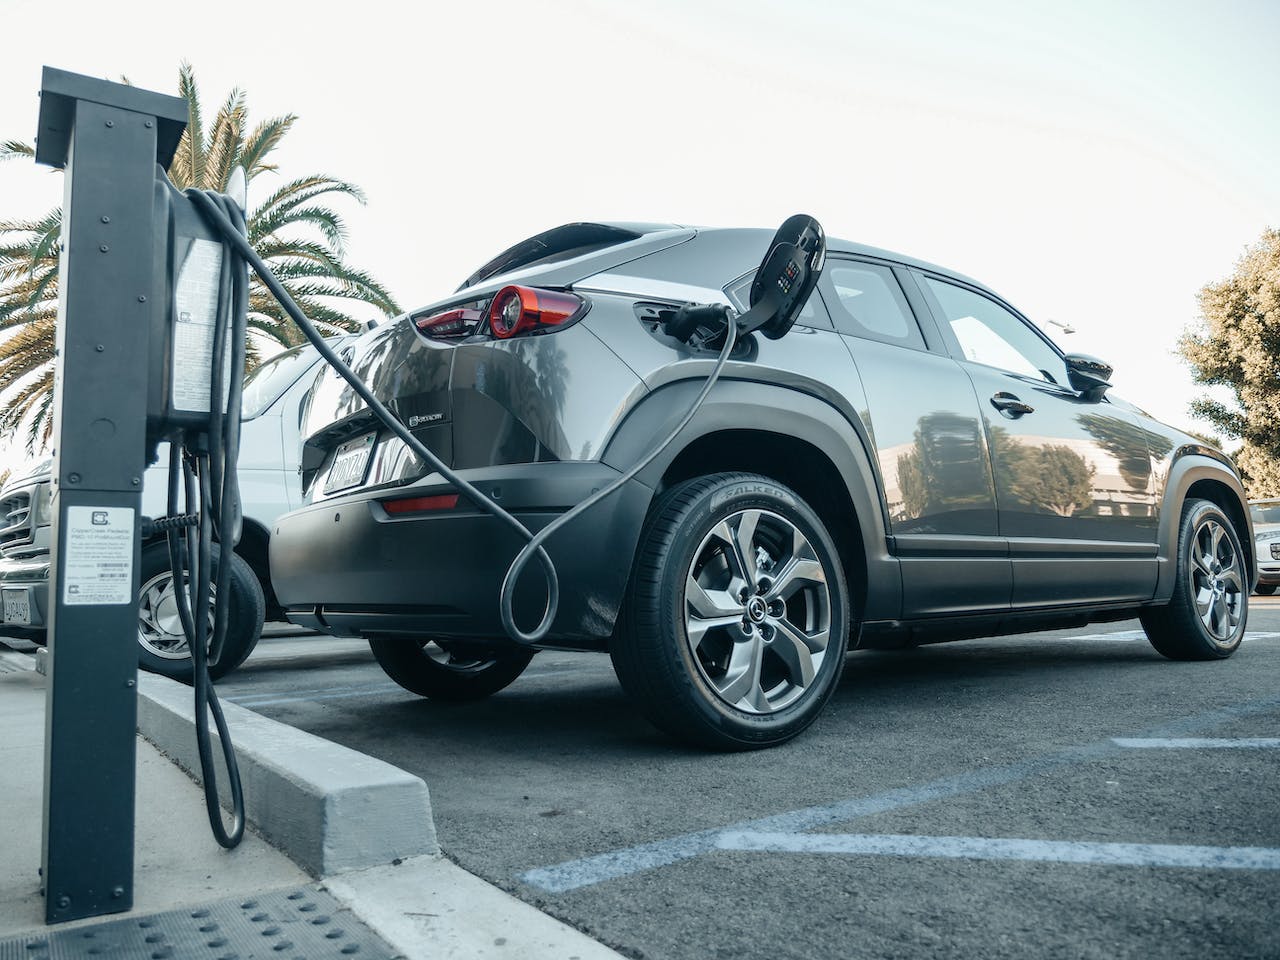 Electric car. PHOTO: Kindel Media / via Pexel